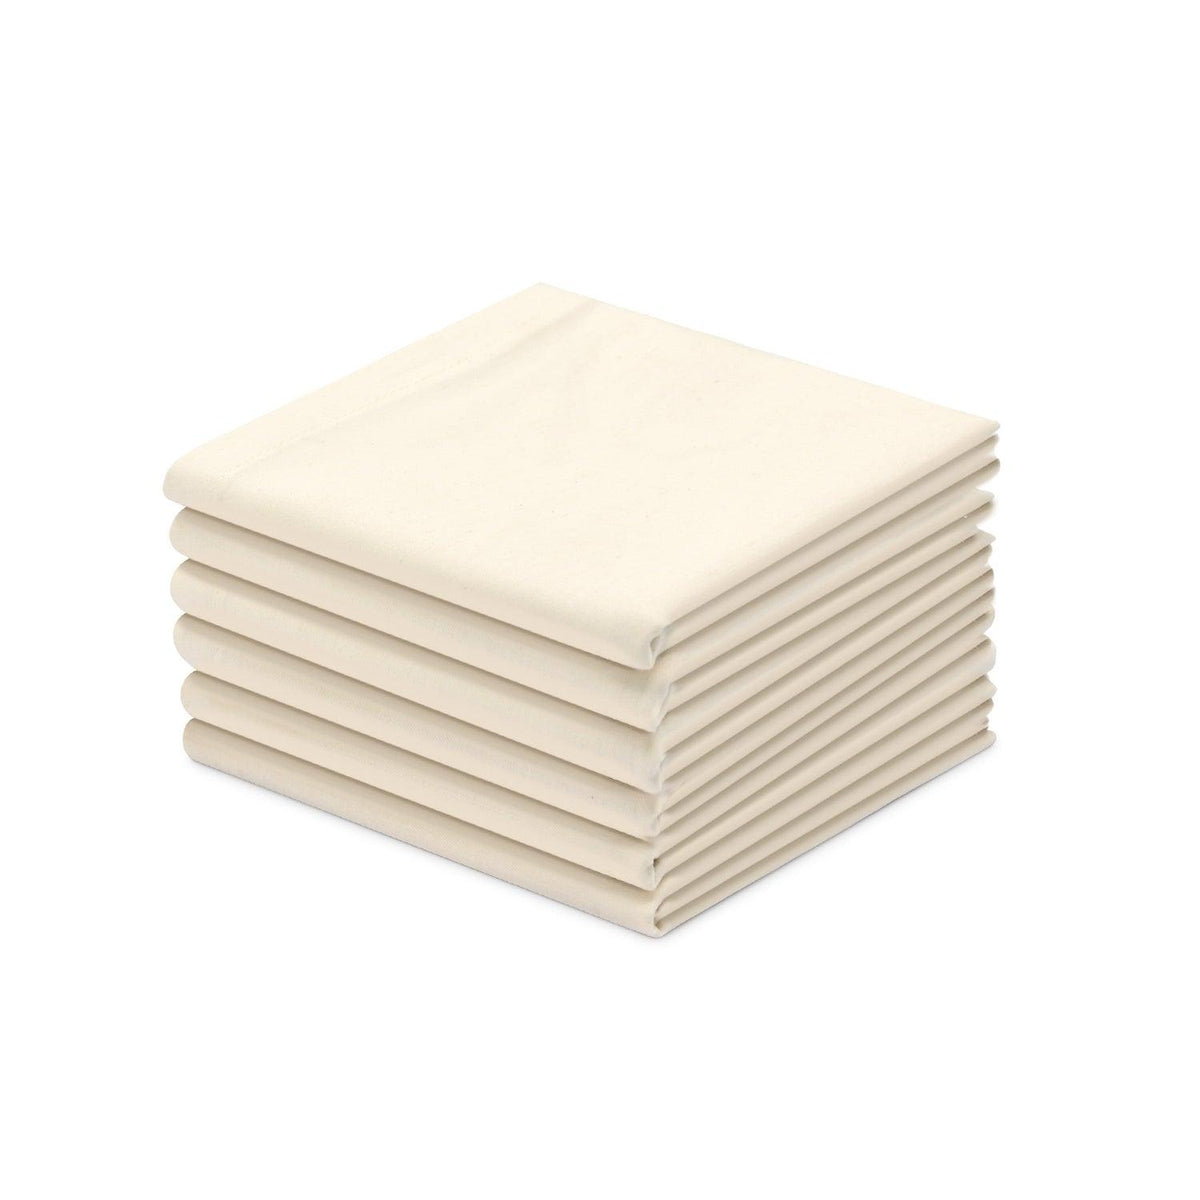 GladRags super-soft Organic 100% Cotton Handkerchiefs –